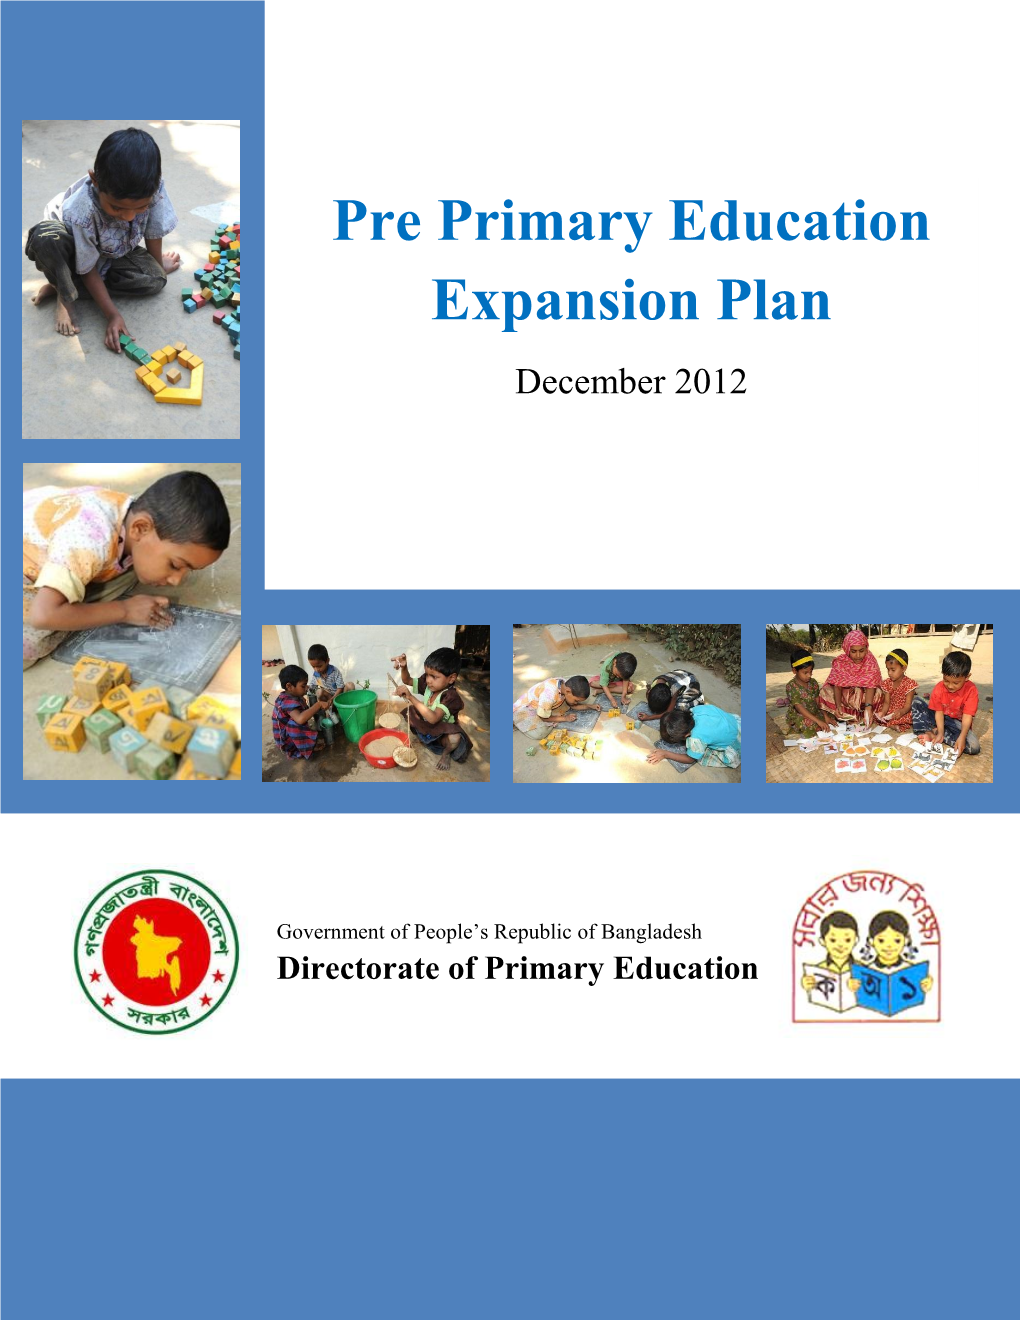 Pre Primary Education Expansion Plan Expansion Plan December 2012